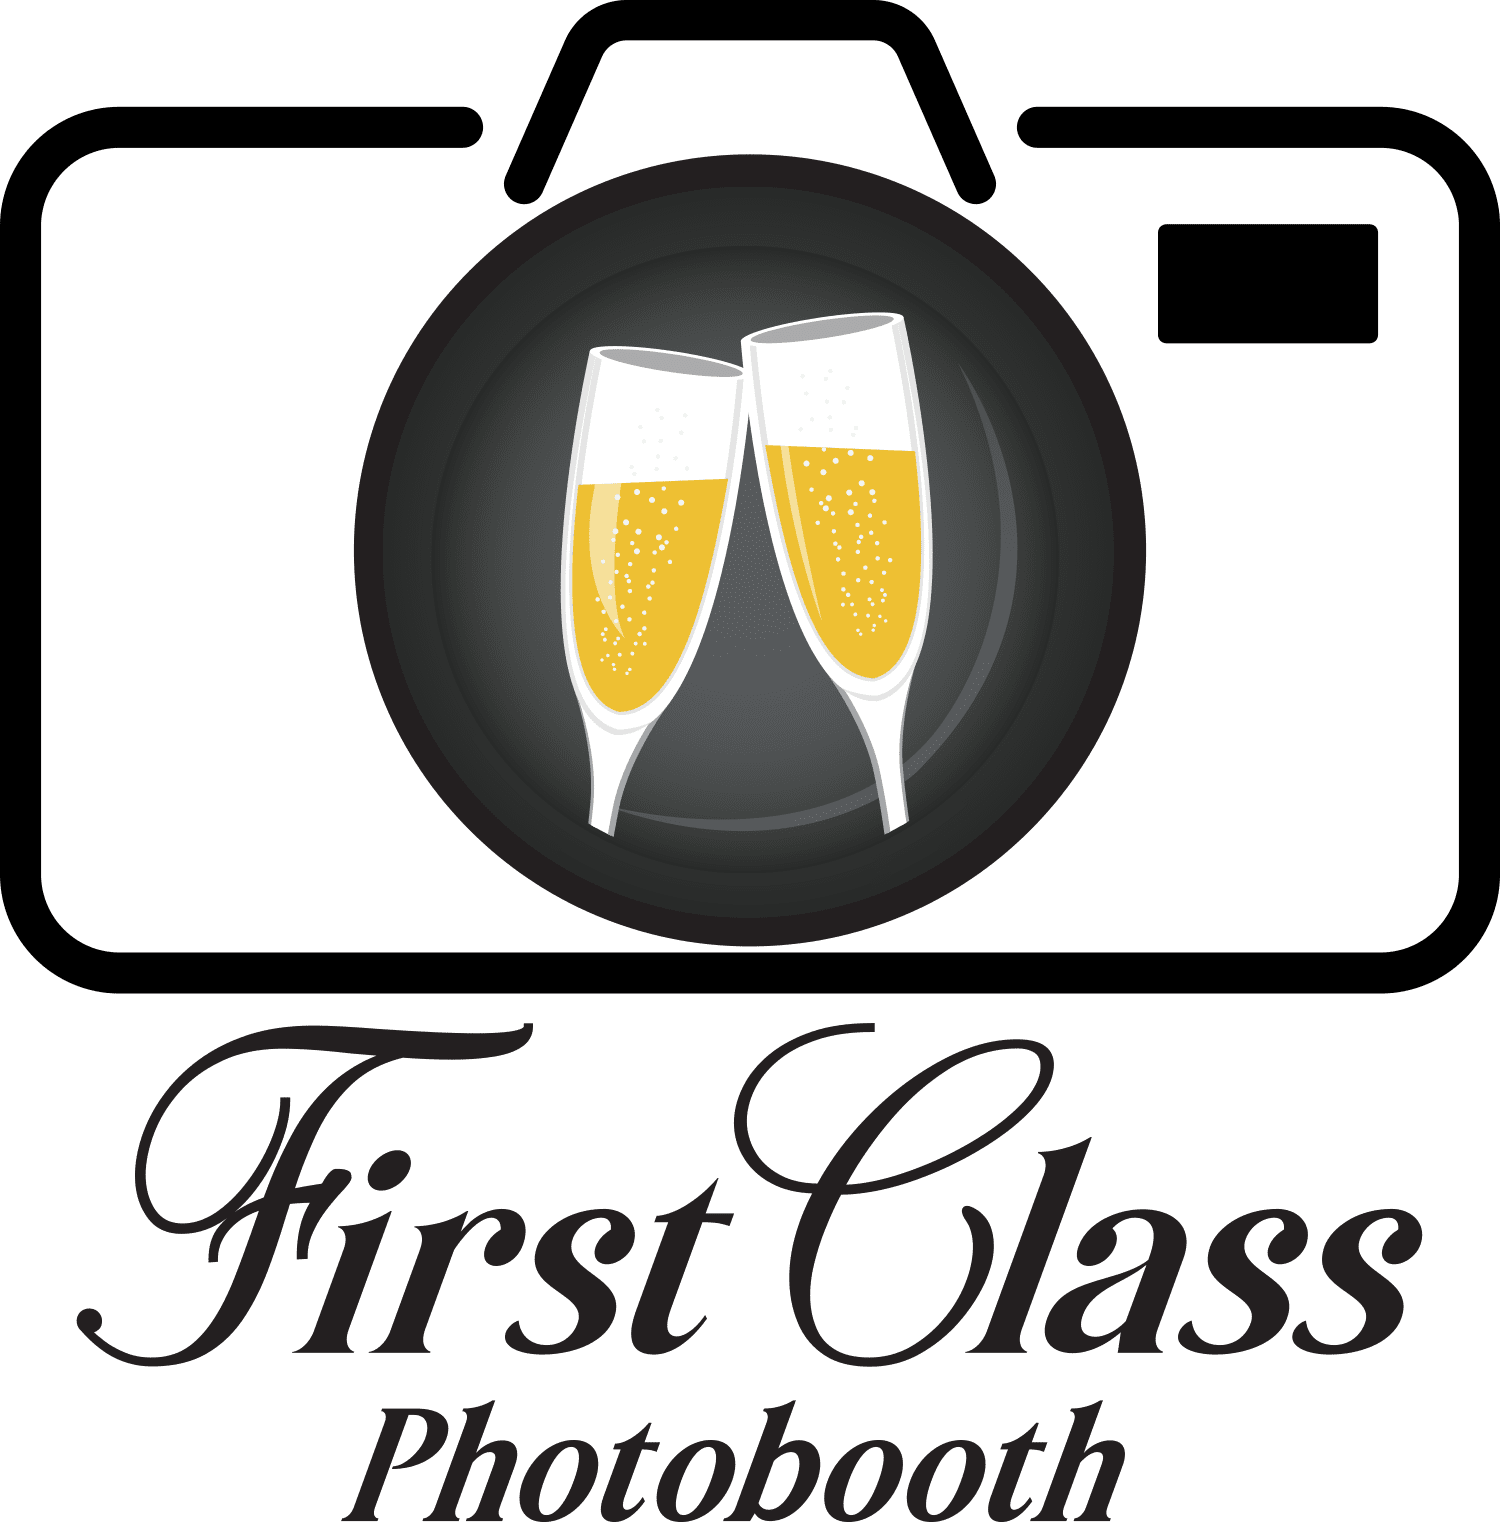 Firstclassphotobooth